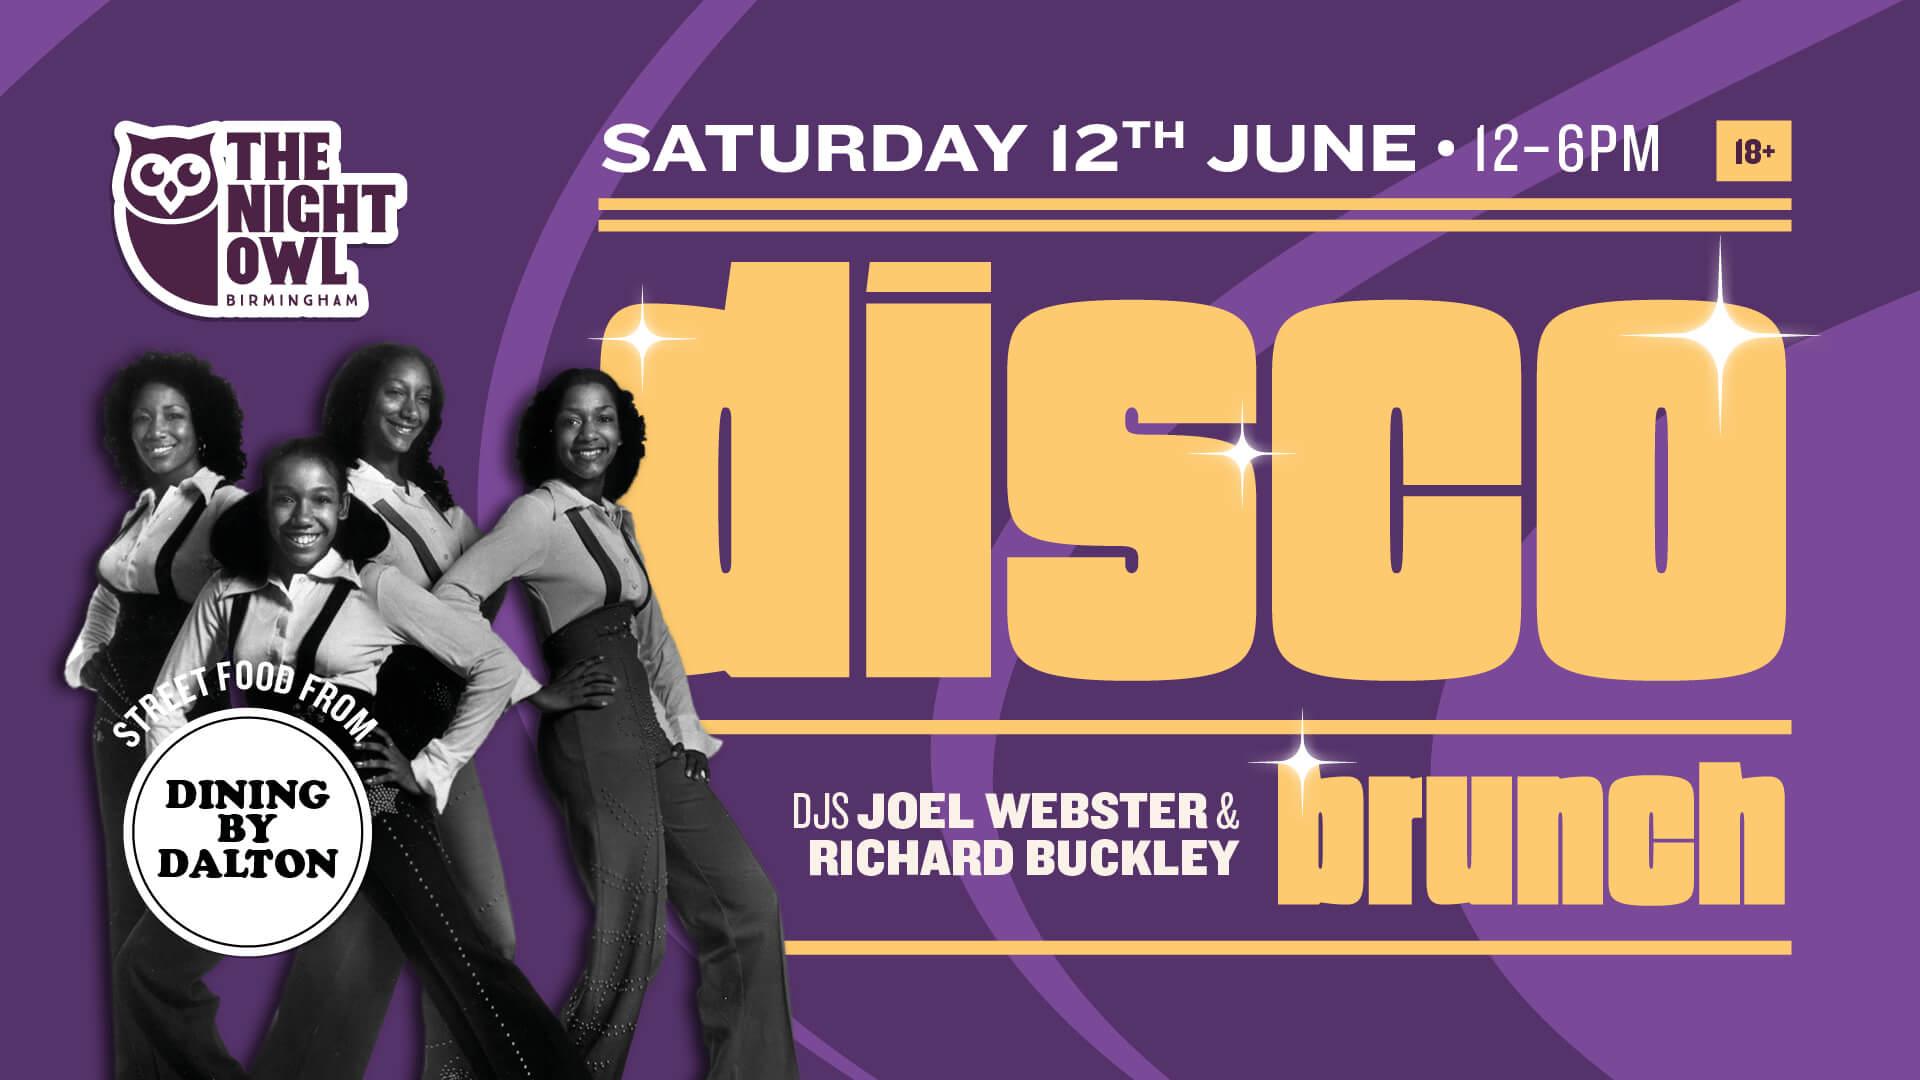 Disco Brunch - The Night Owl - Saturday 12th June